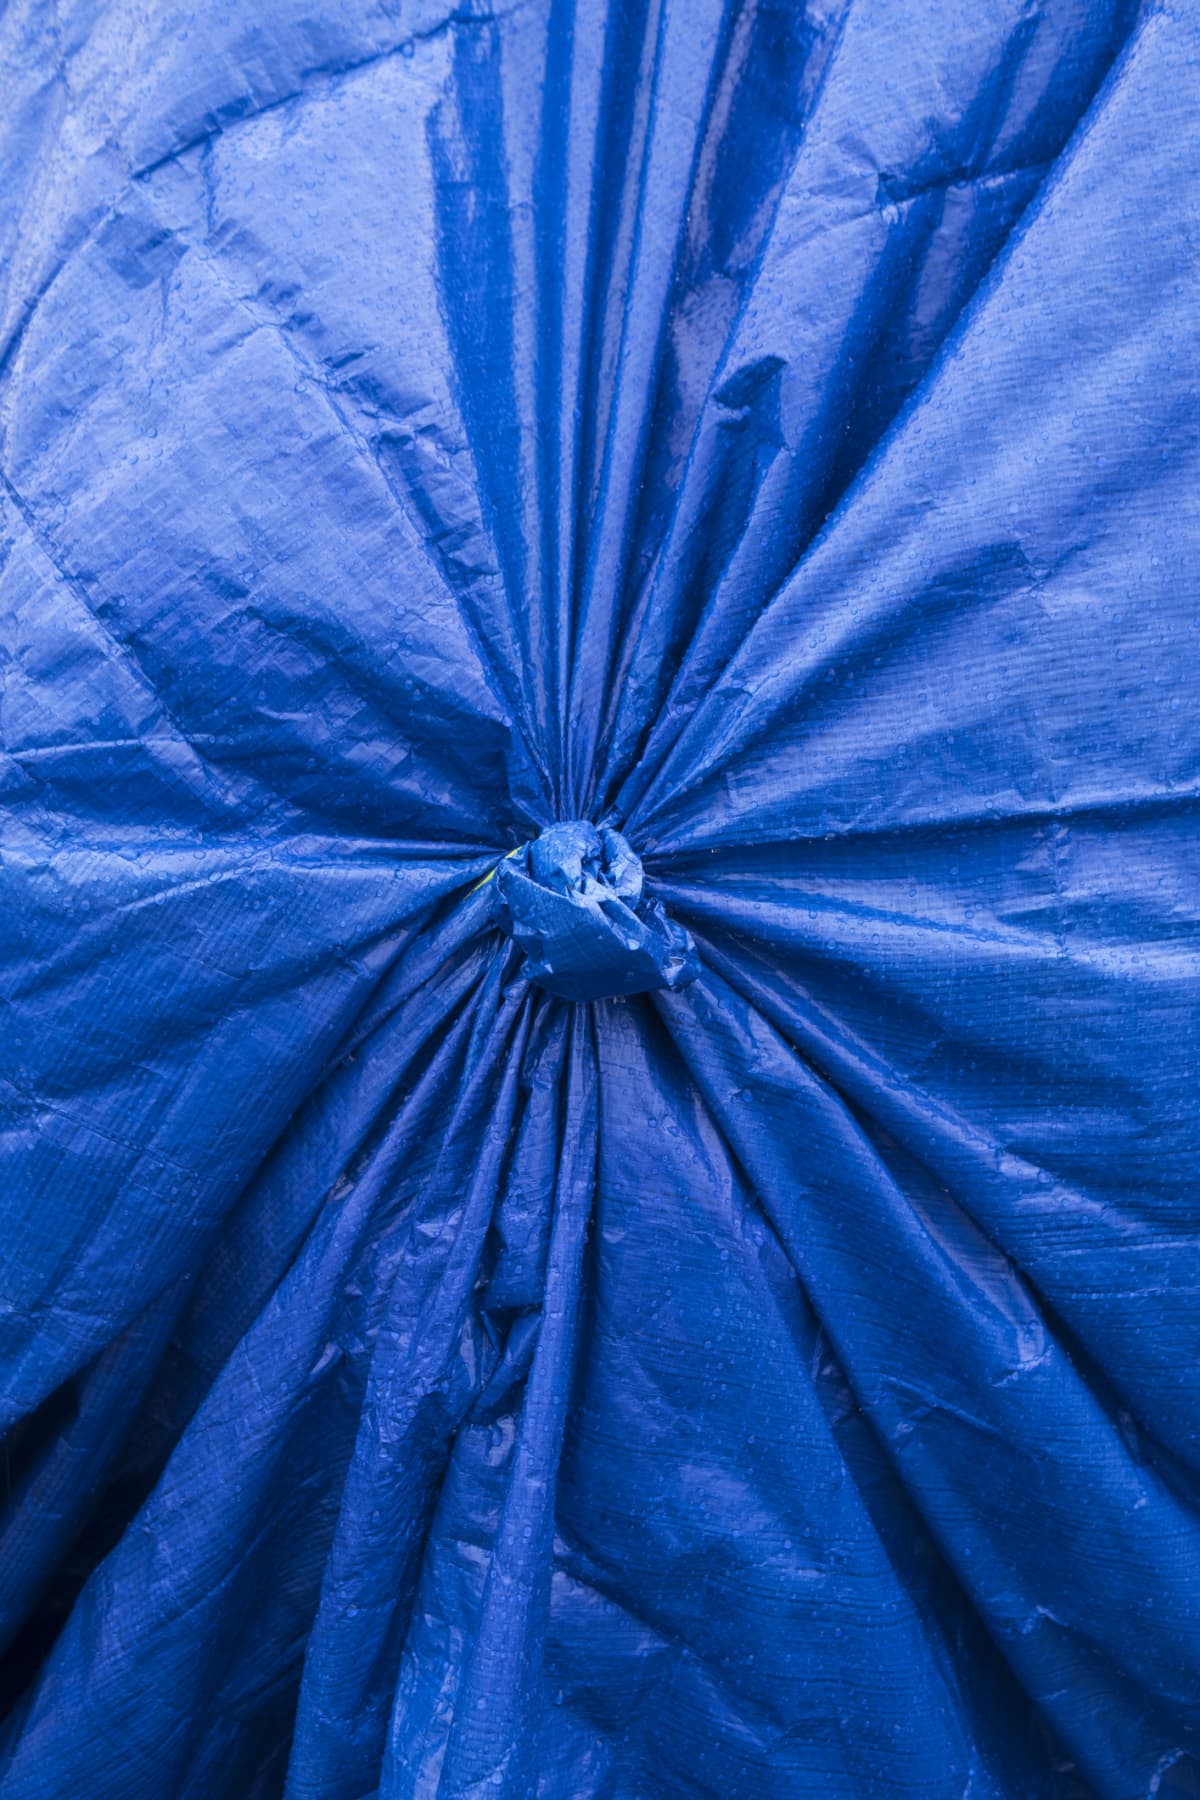 A blue tarp